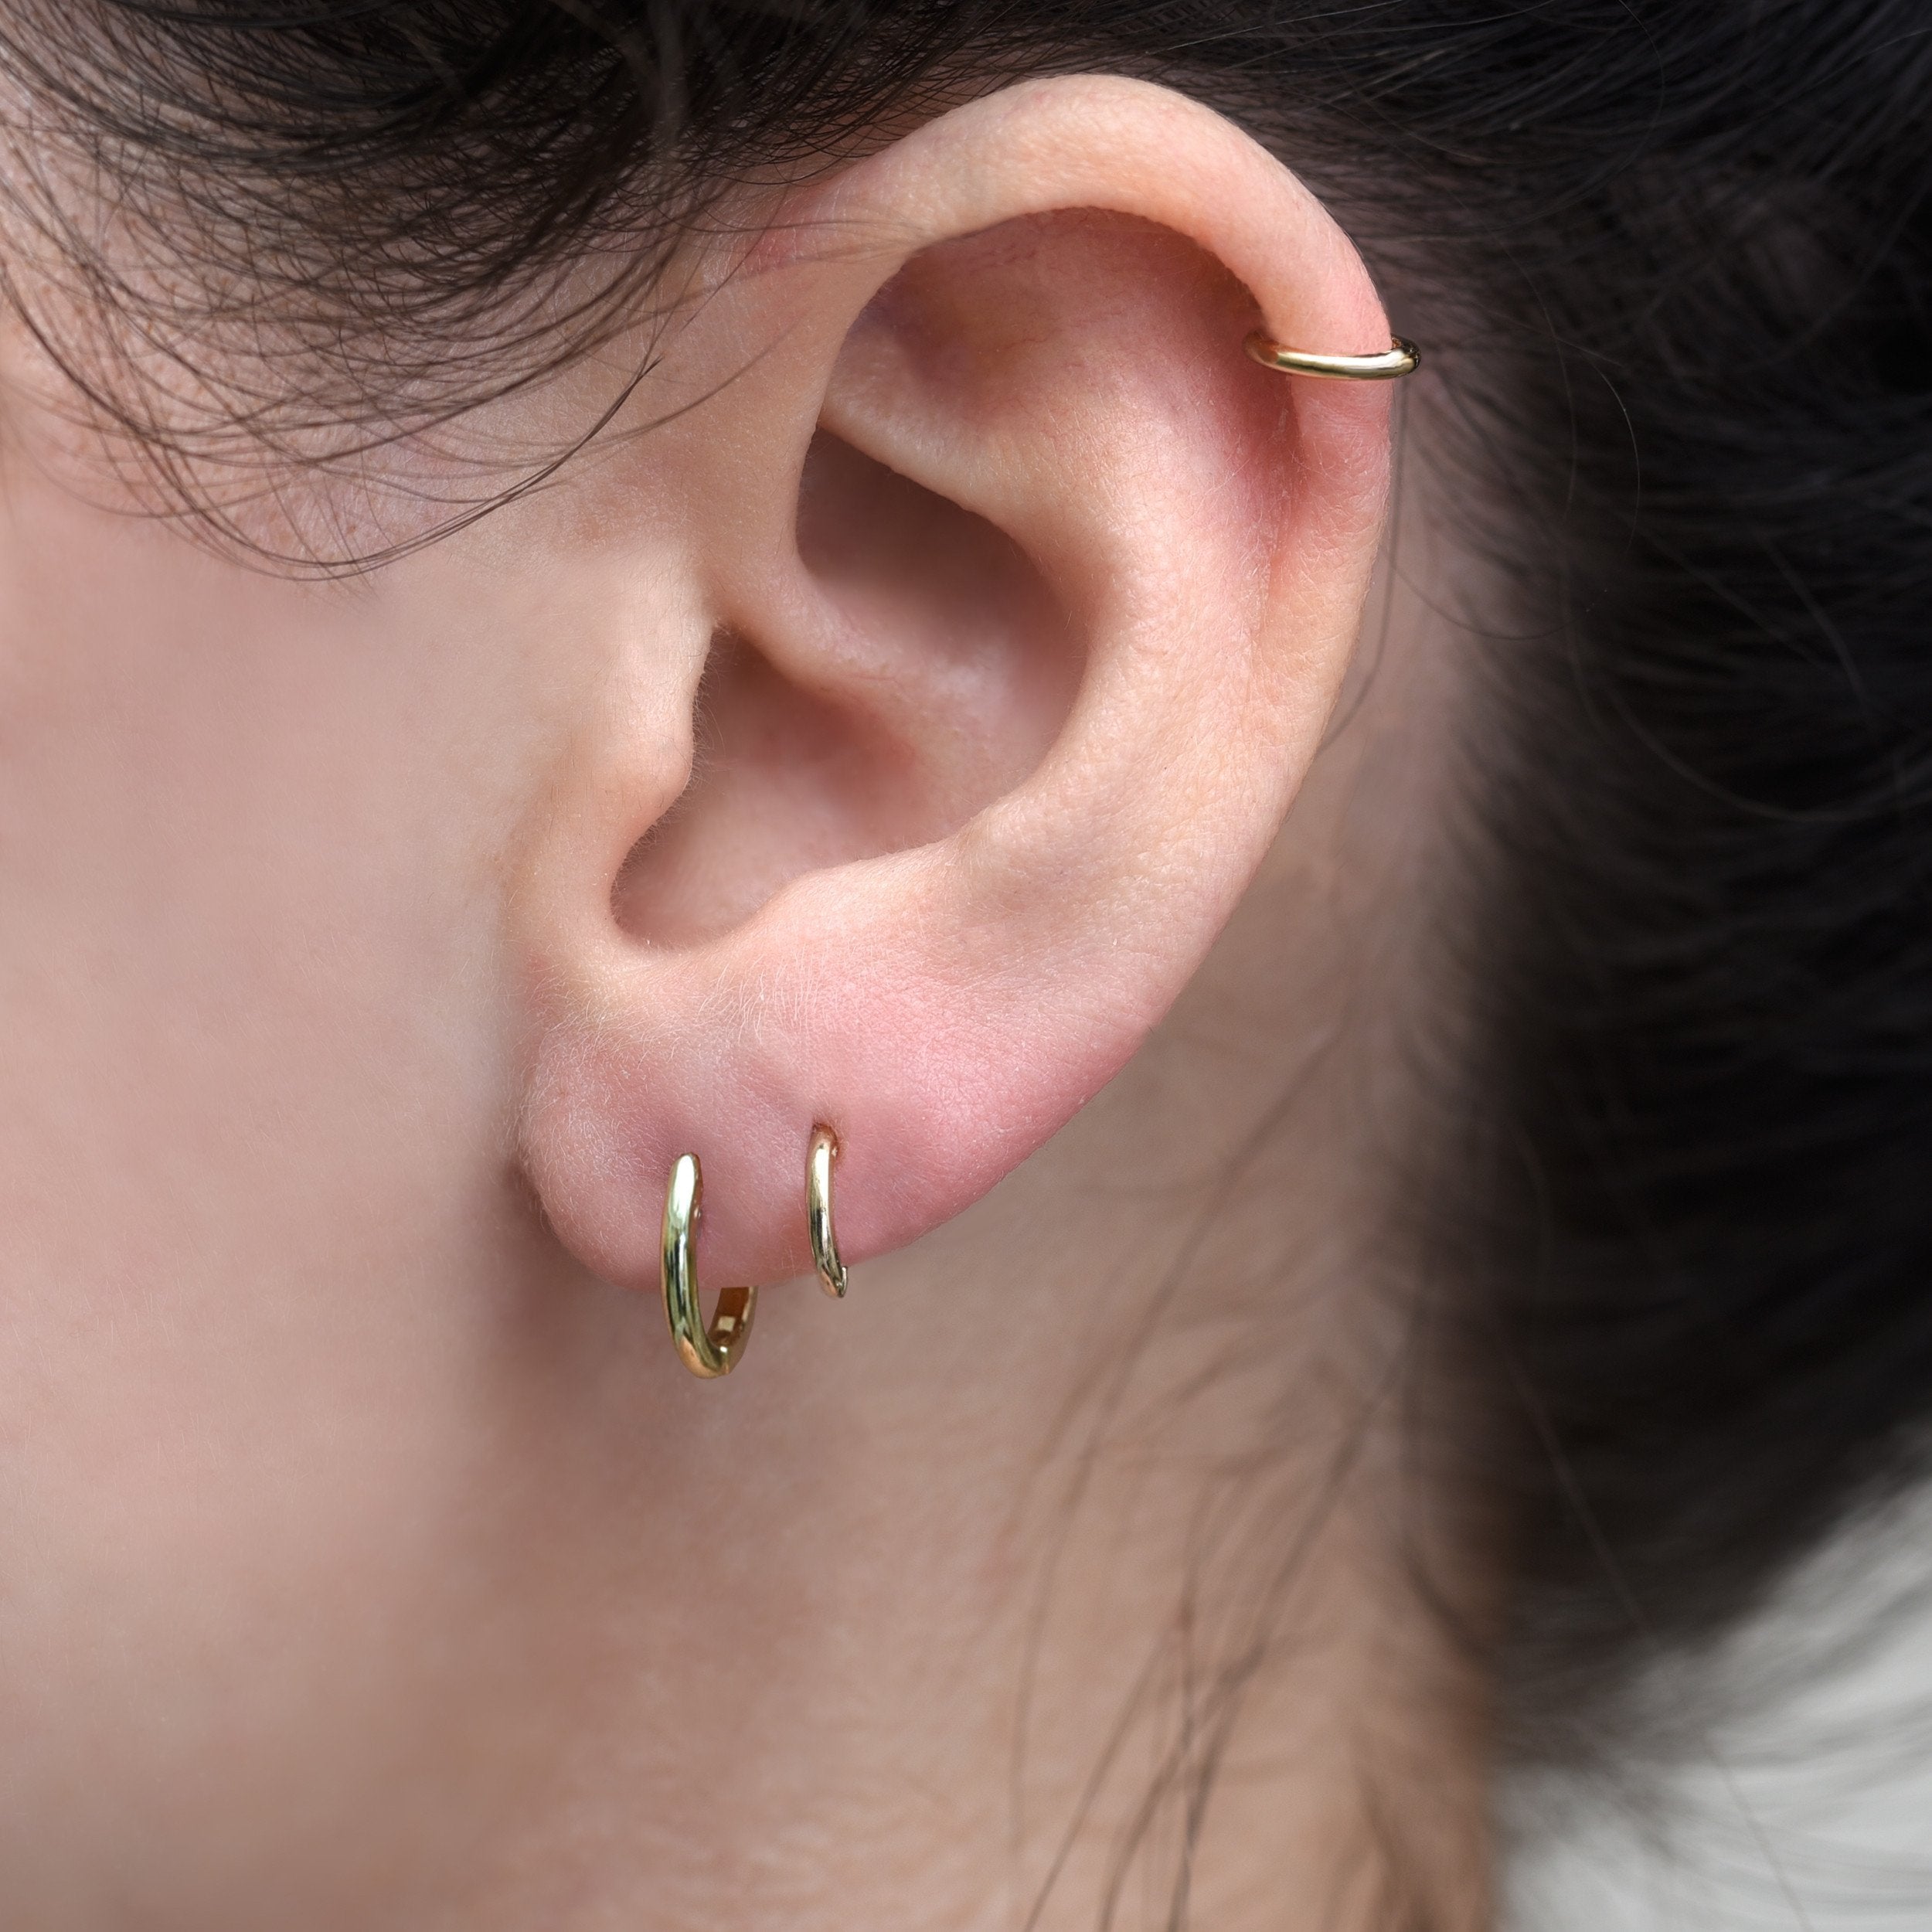 Earring gauges Stud Length  Hoop Size Guide for Piercings  Valensole  Jewelry